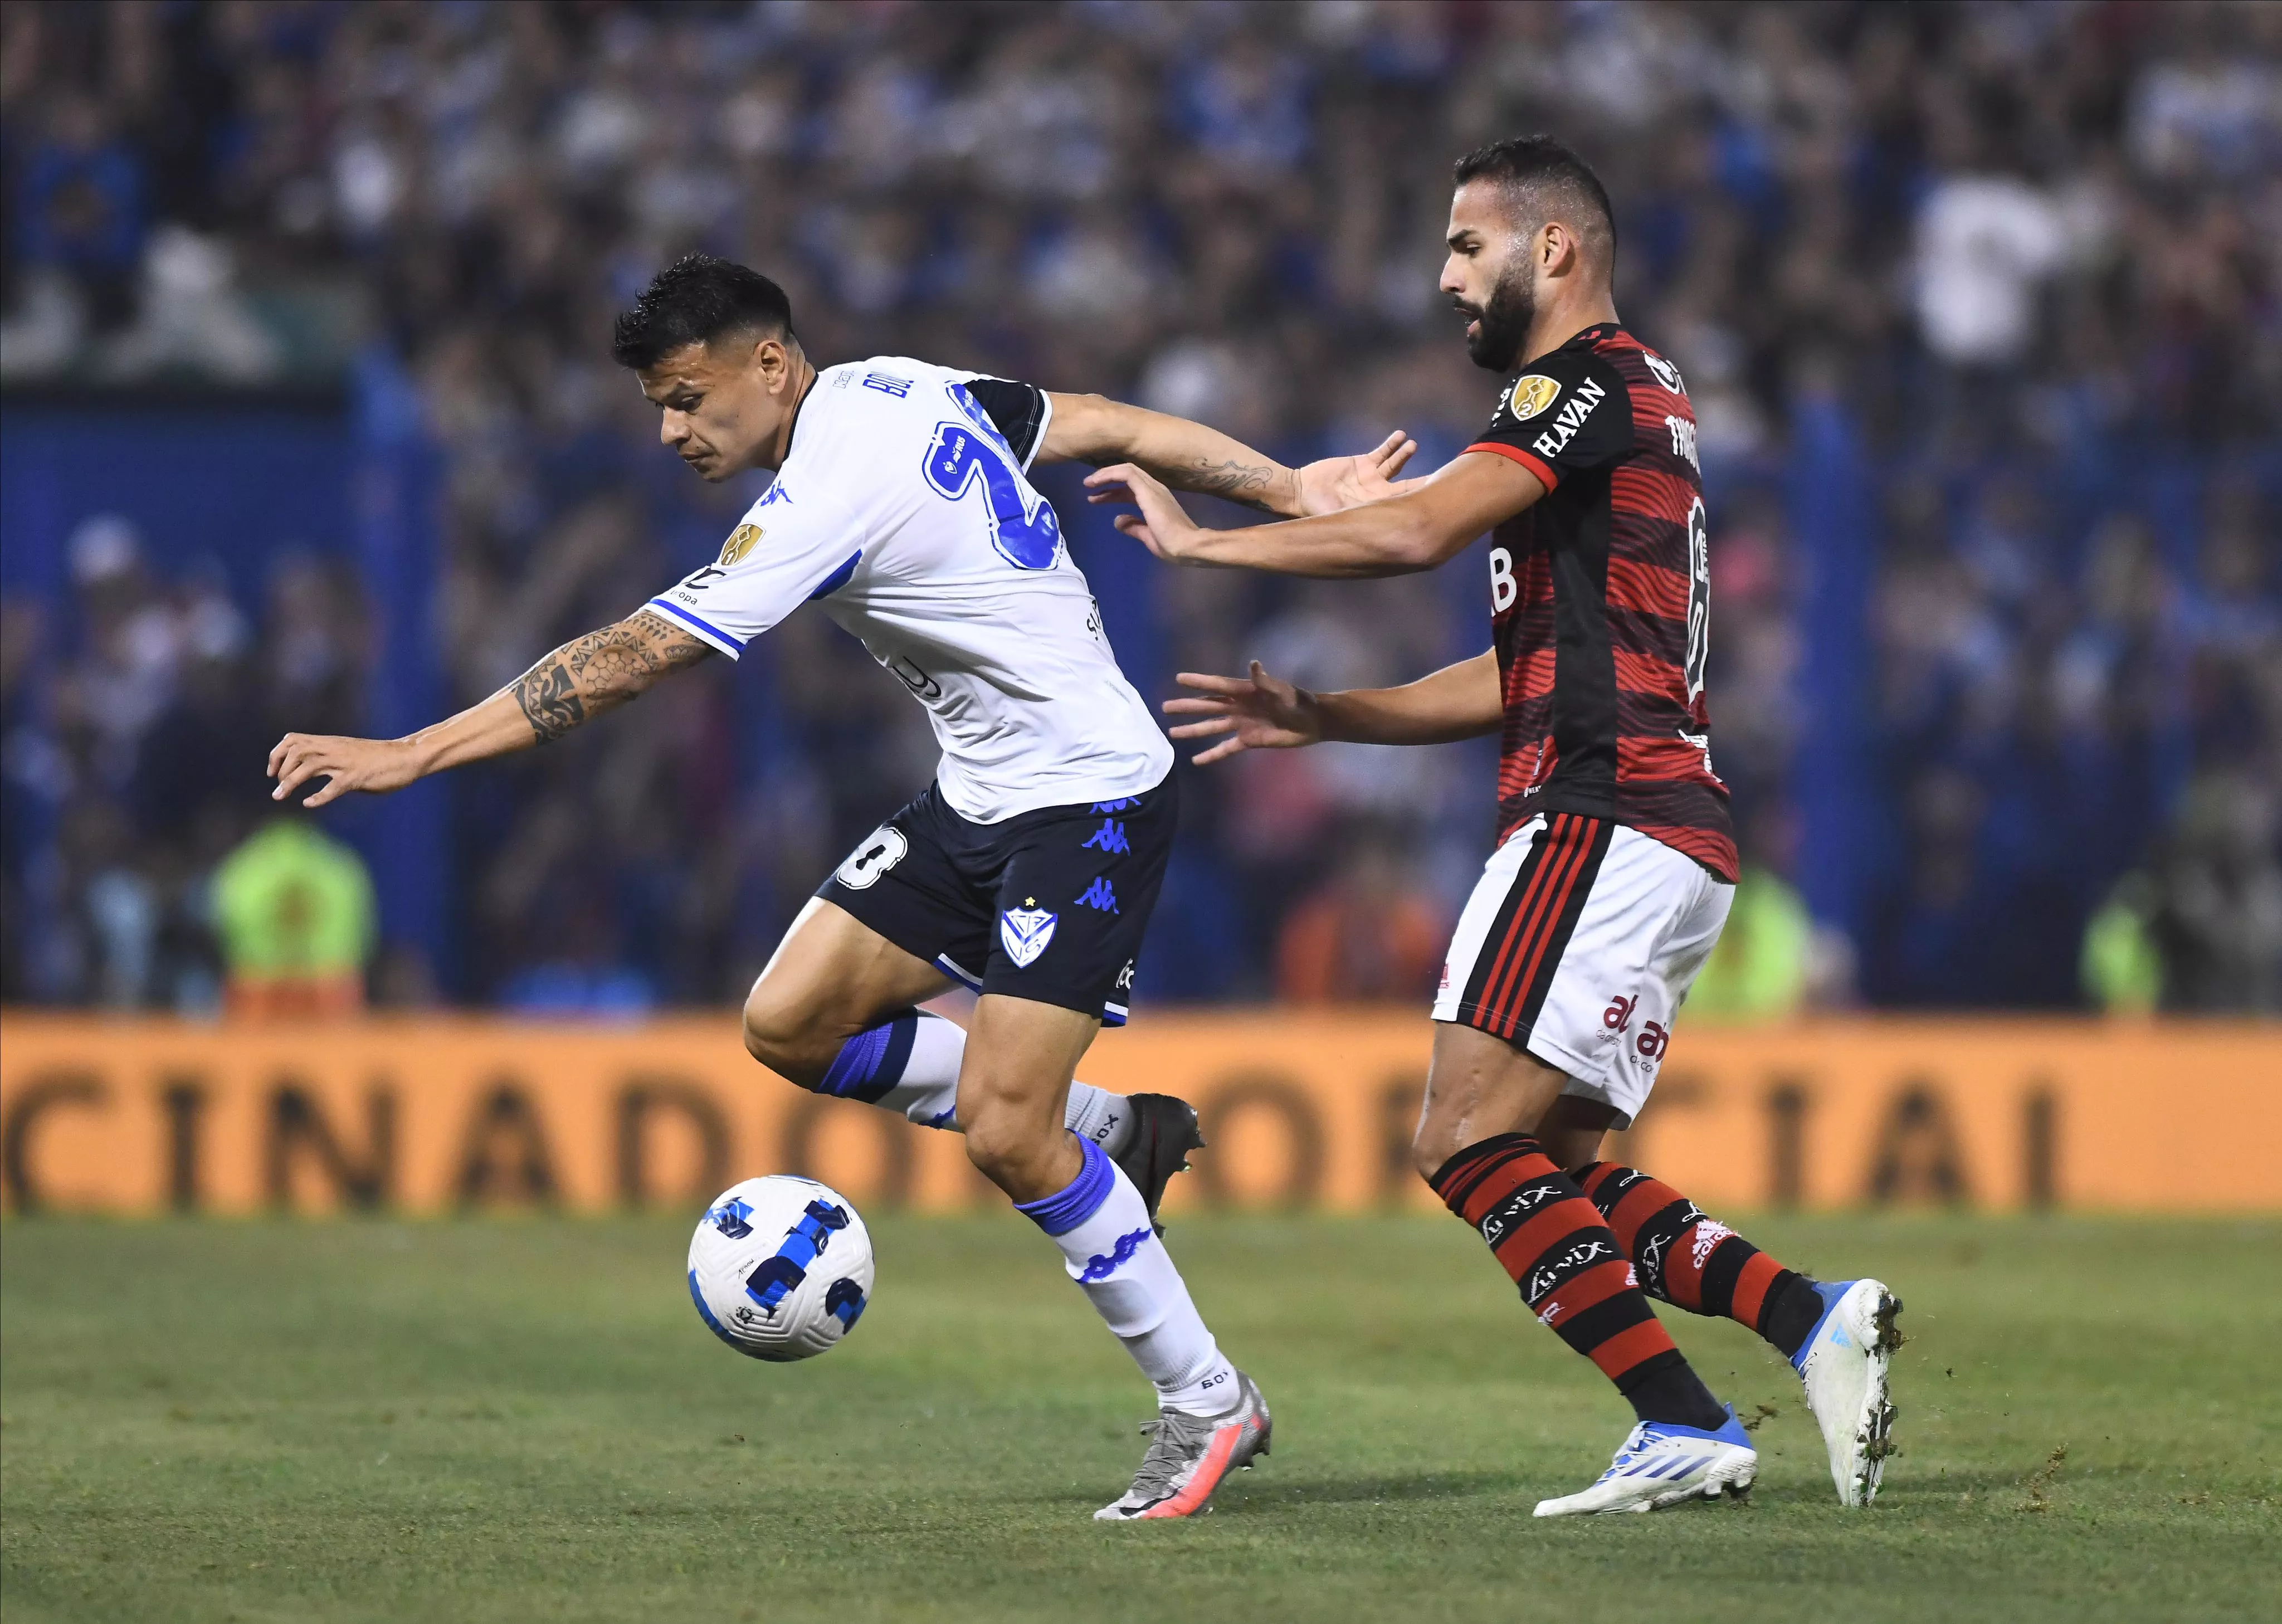 Vélez recibió un durísimo golpe de Flamengo en el Amalfitani